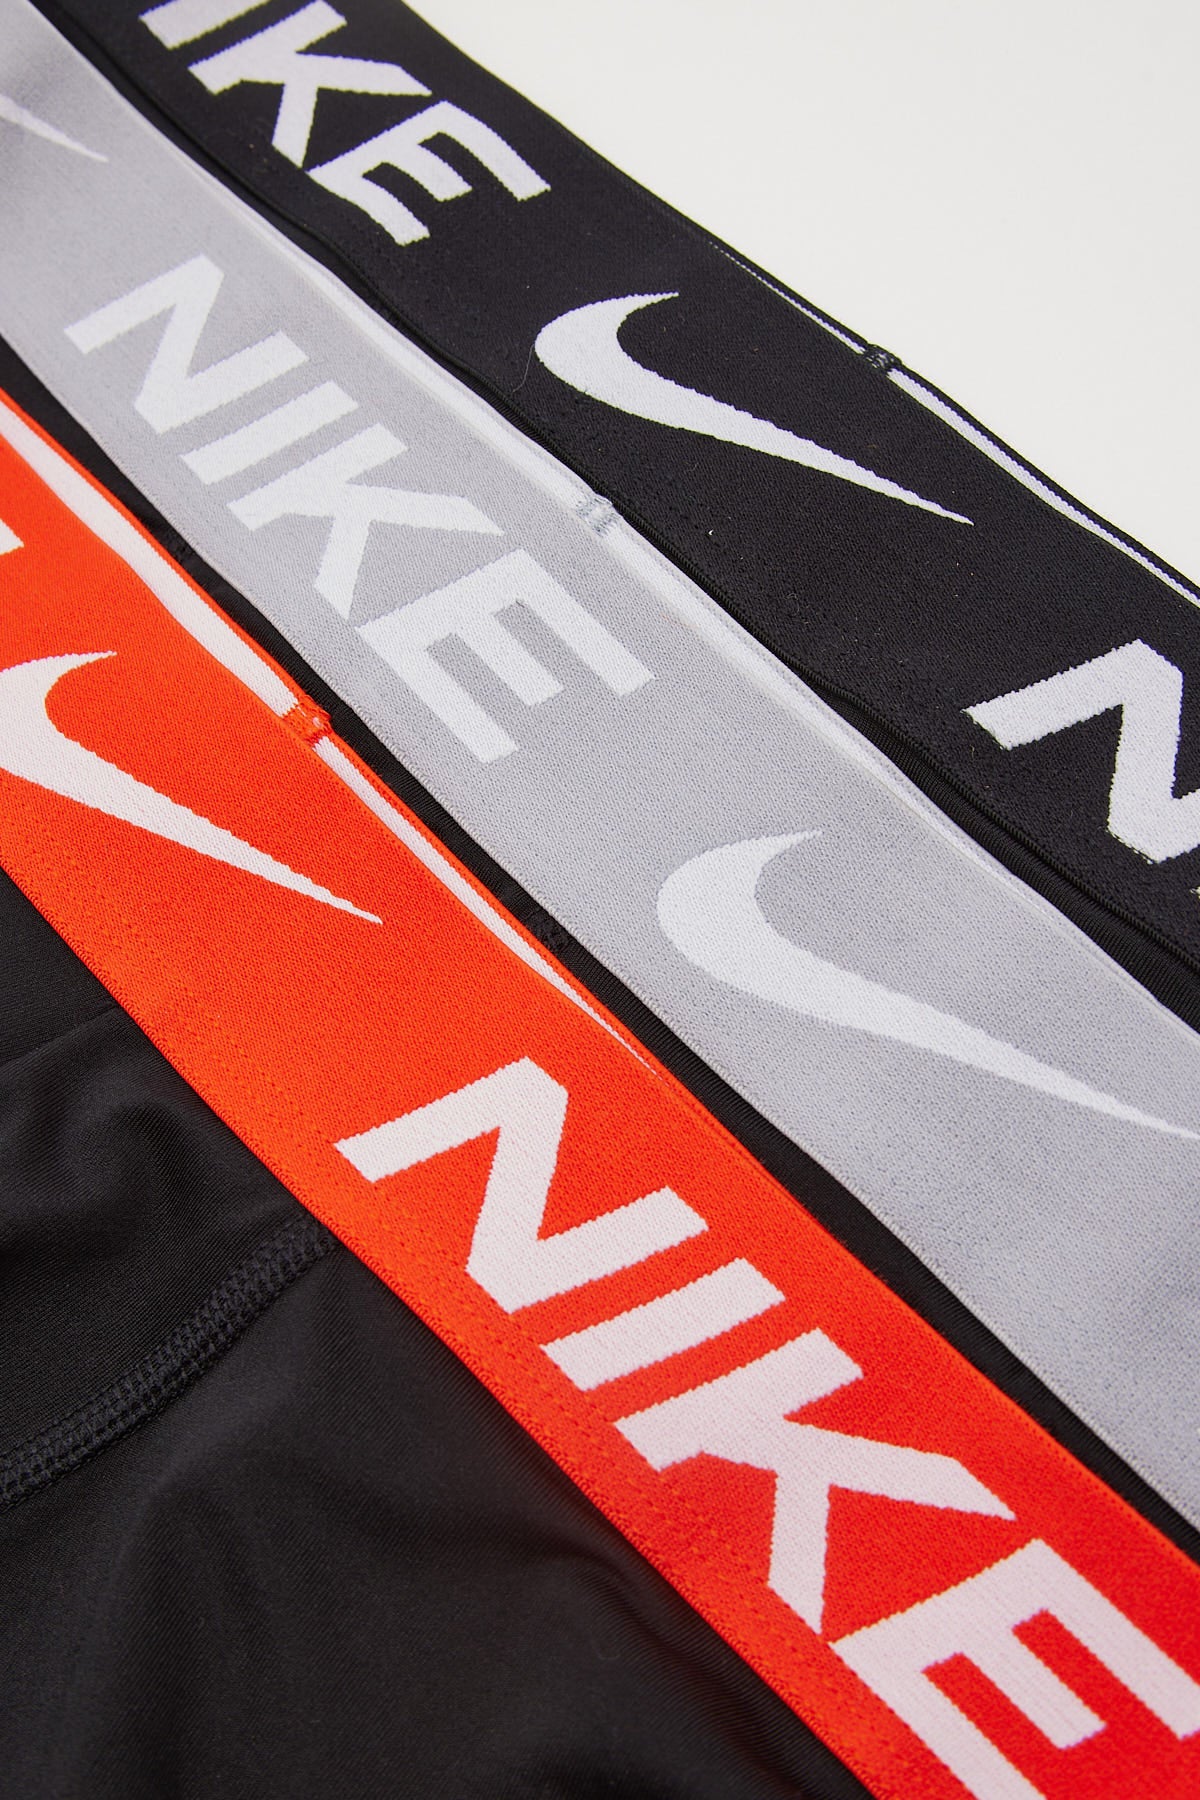 Nike Underwear Essential Micro Trunk 3pk Black